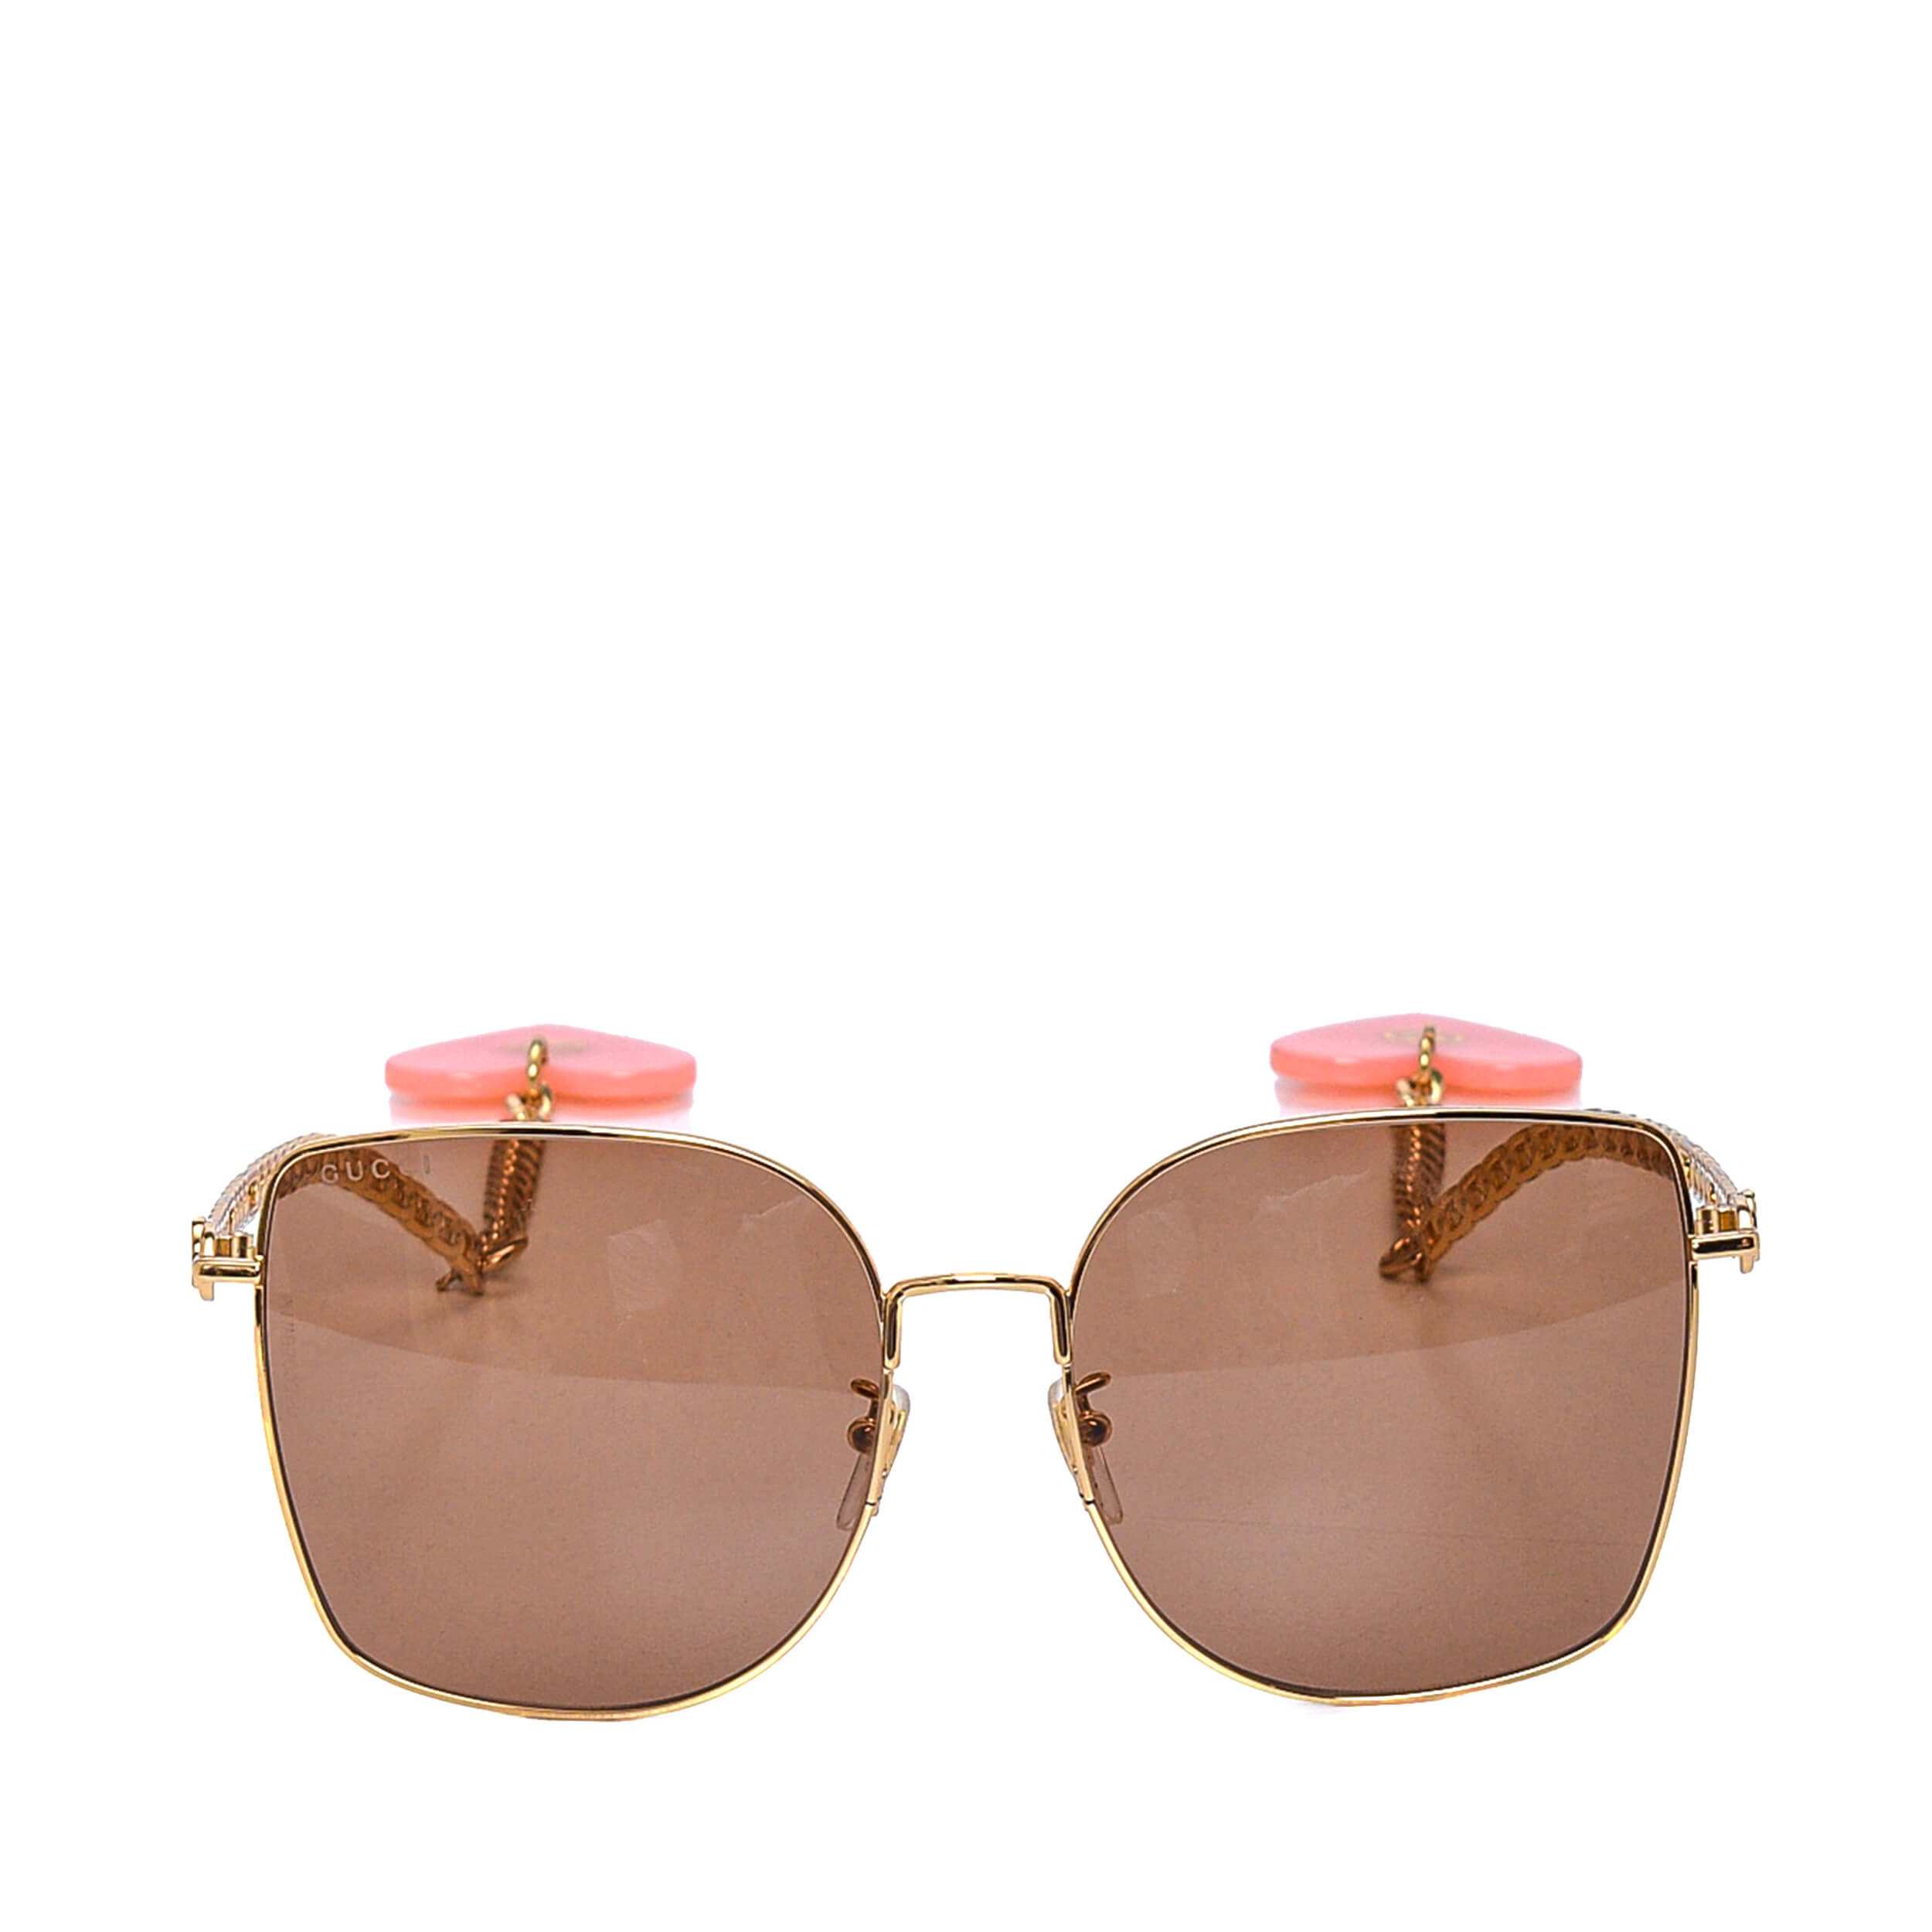 Gucci - Brown Rectangle Acetate Sunglasses